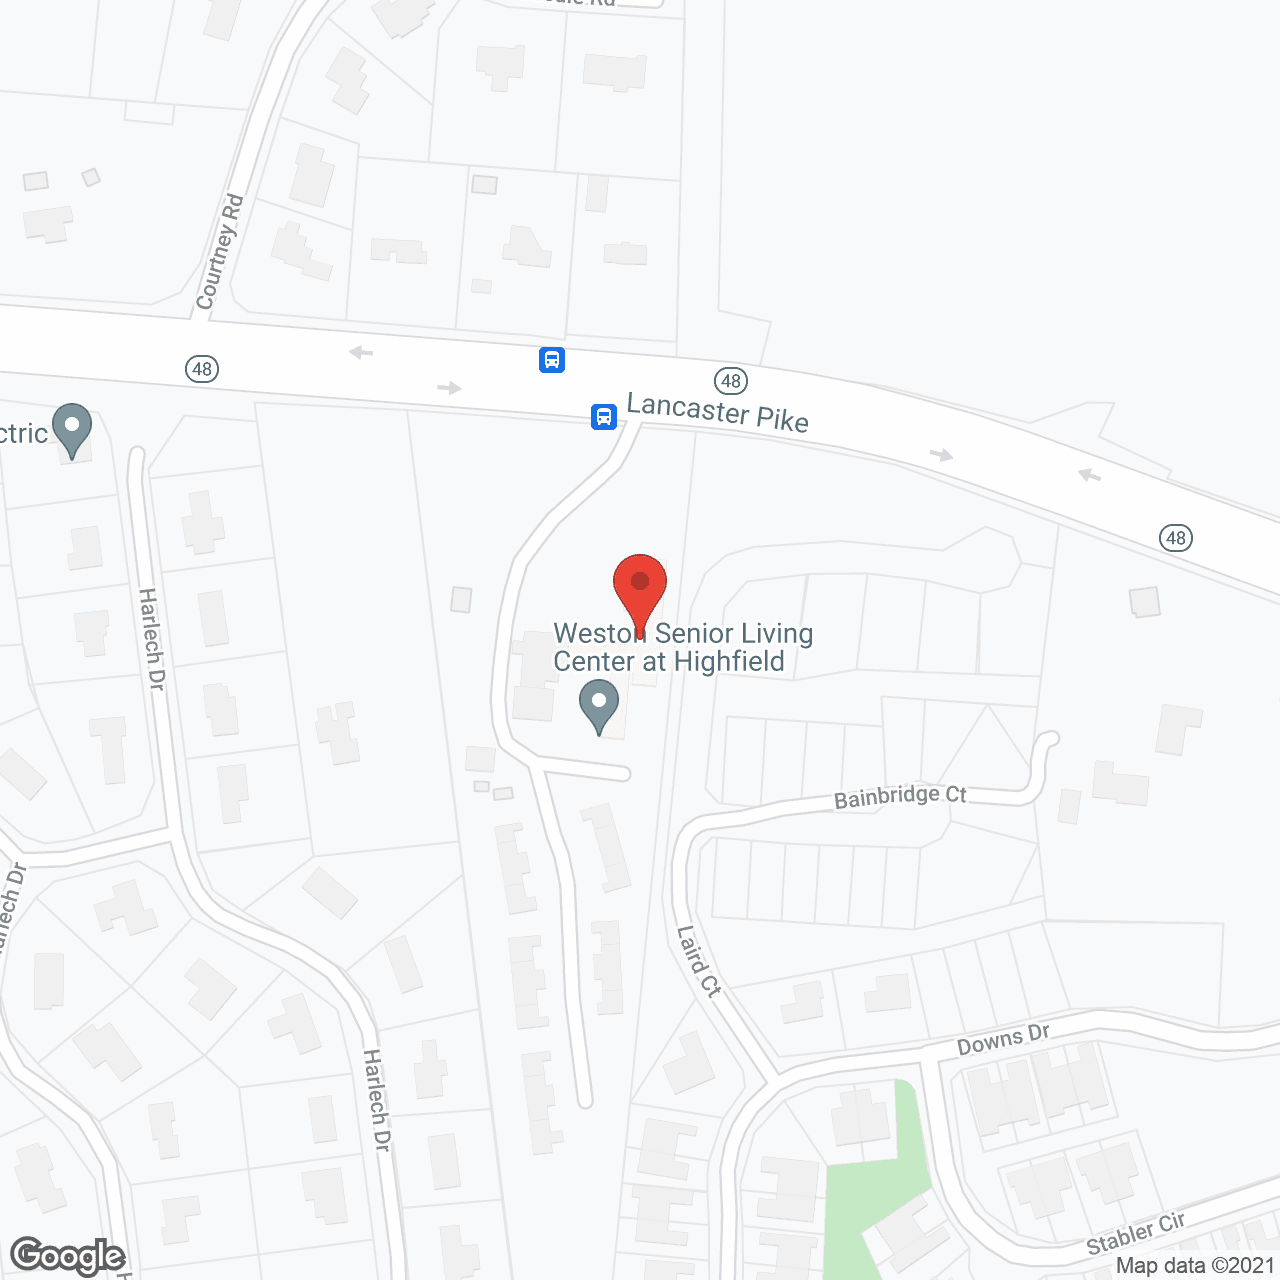 Weston Senior Living Center at Highfield in google map